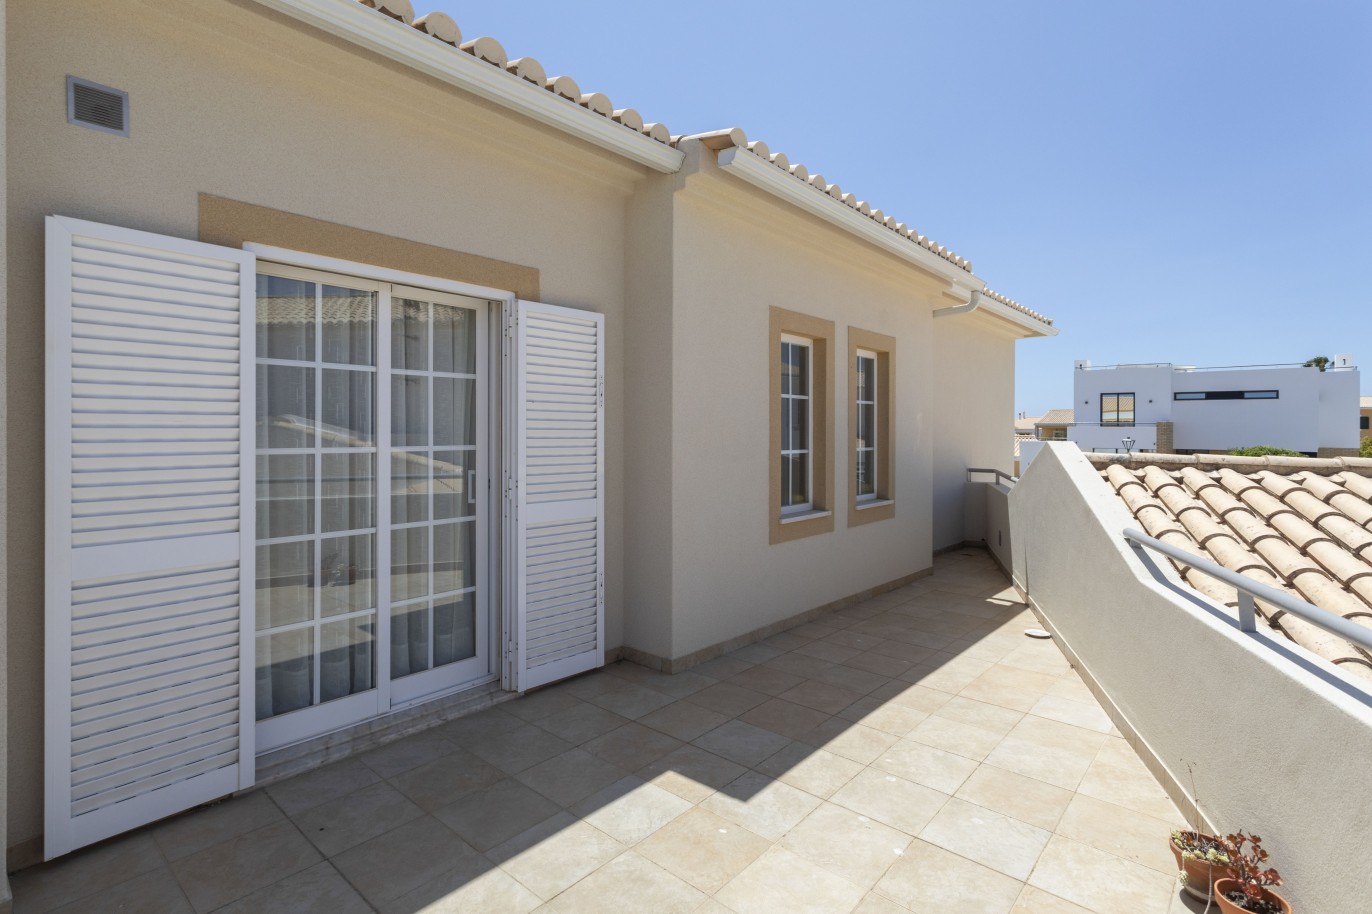 Villa de 3 chambres à vendre à Porto de Mós, Algarve_233241